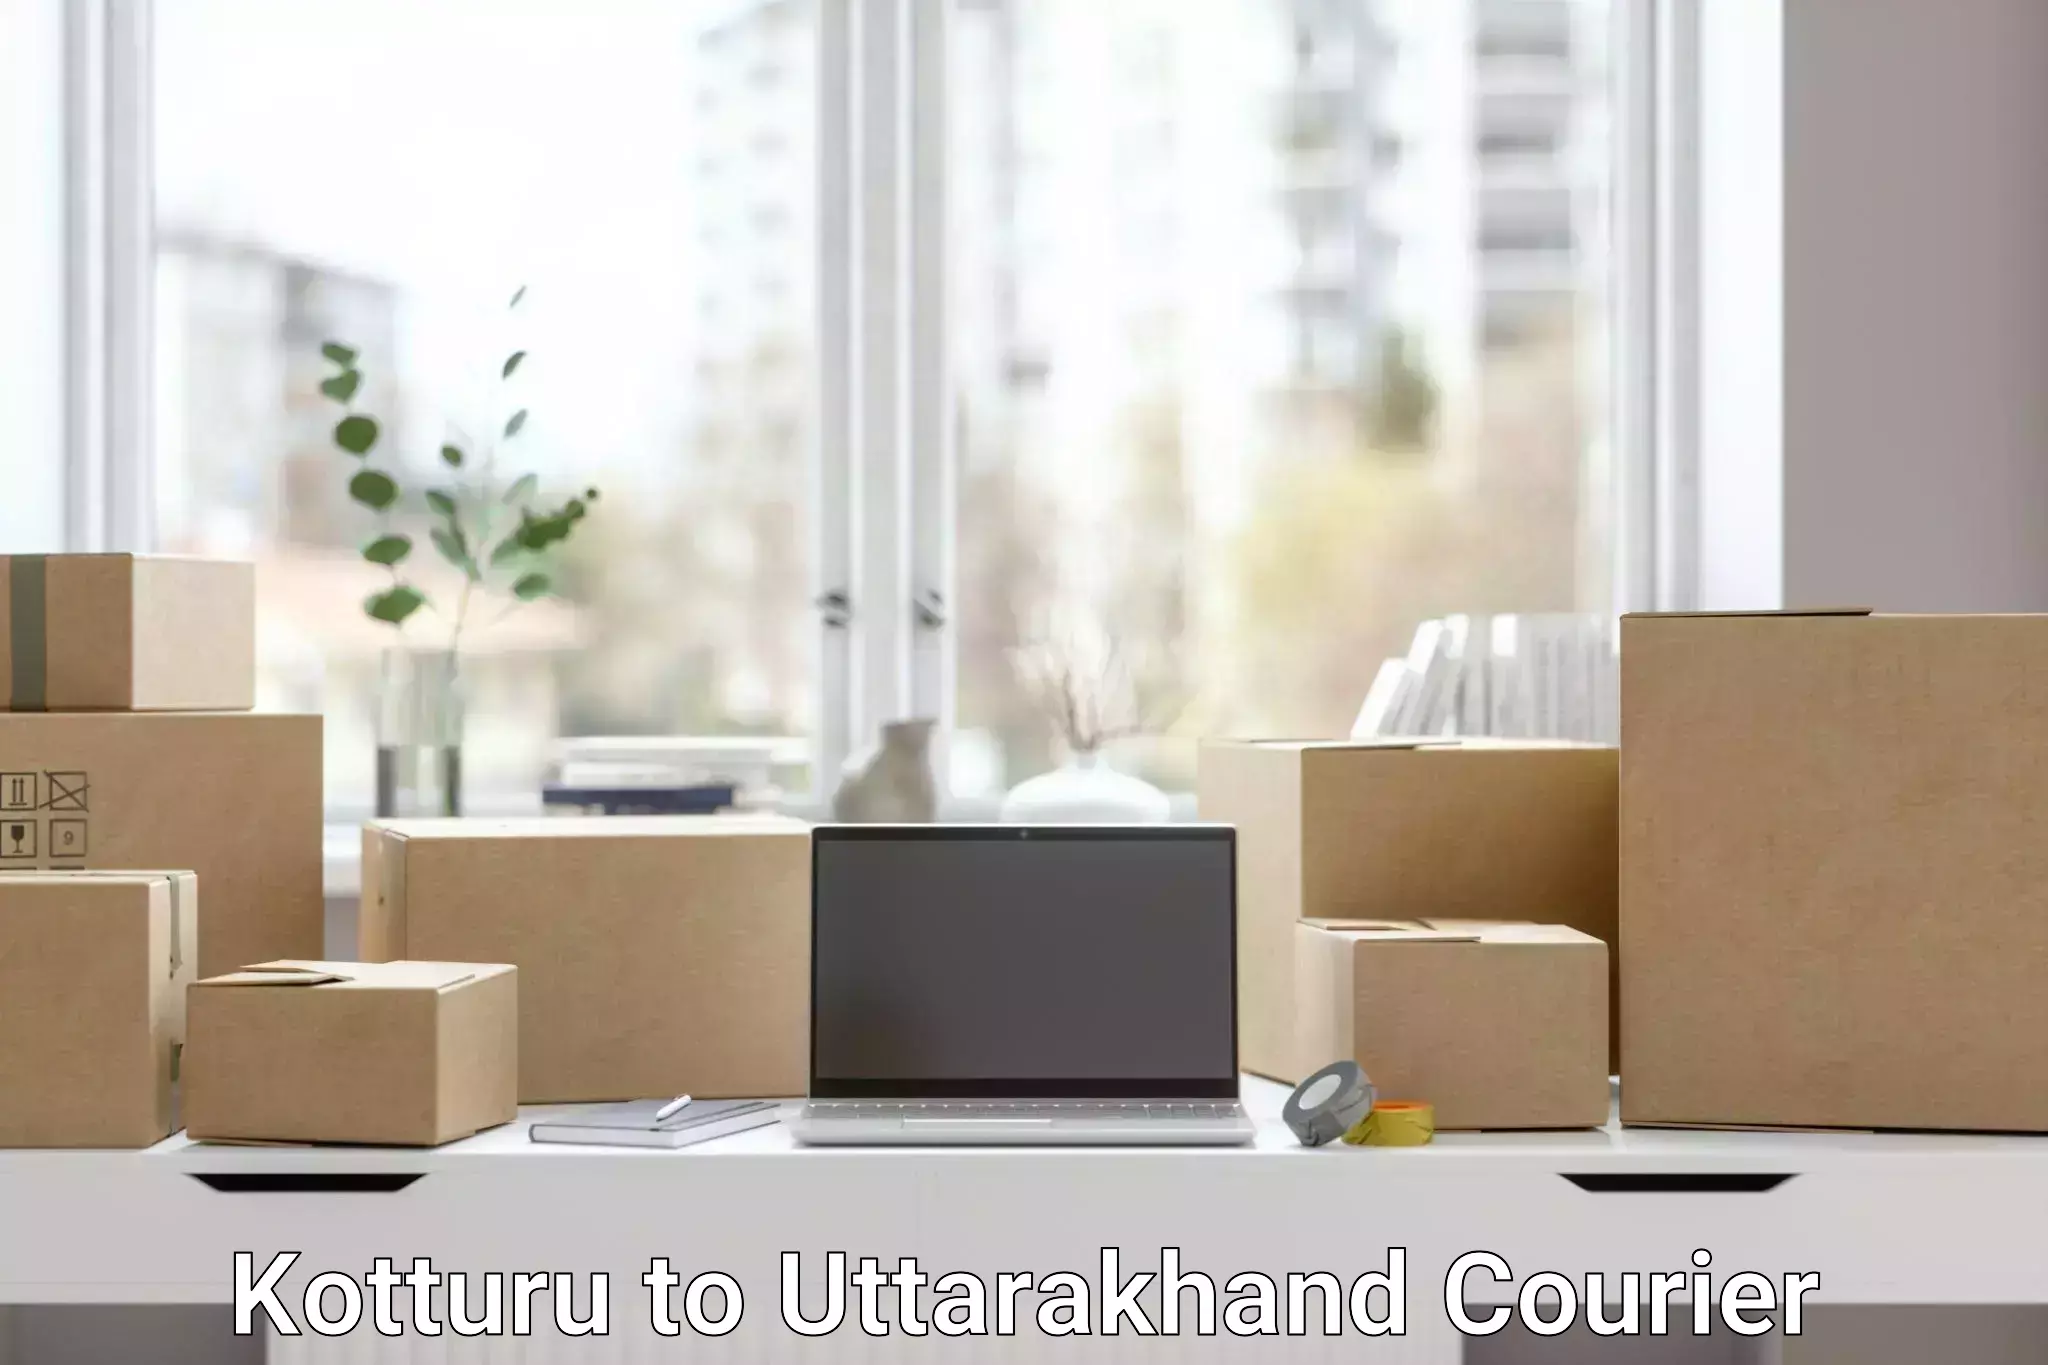 Sustainable delivery practices Kotturu to Uttarakhand